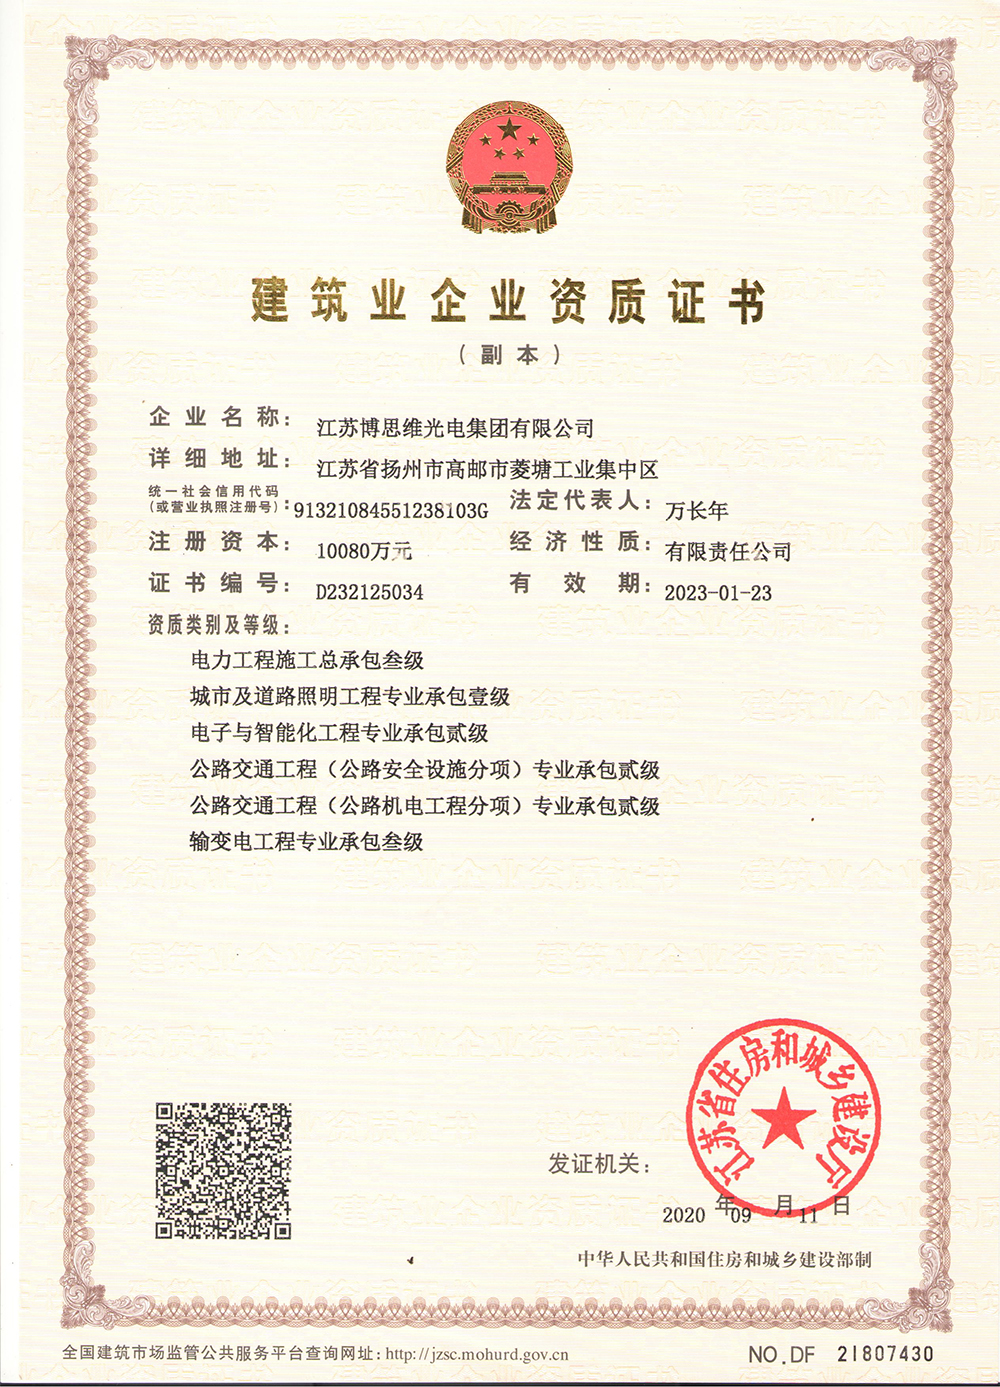 Qualification certificate of construction enterprise